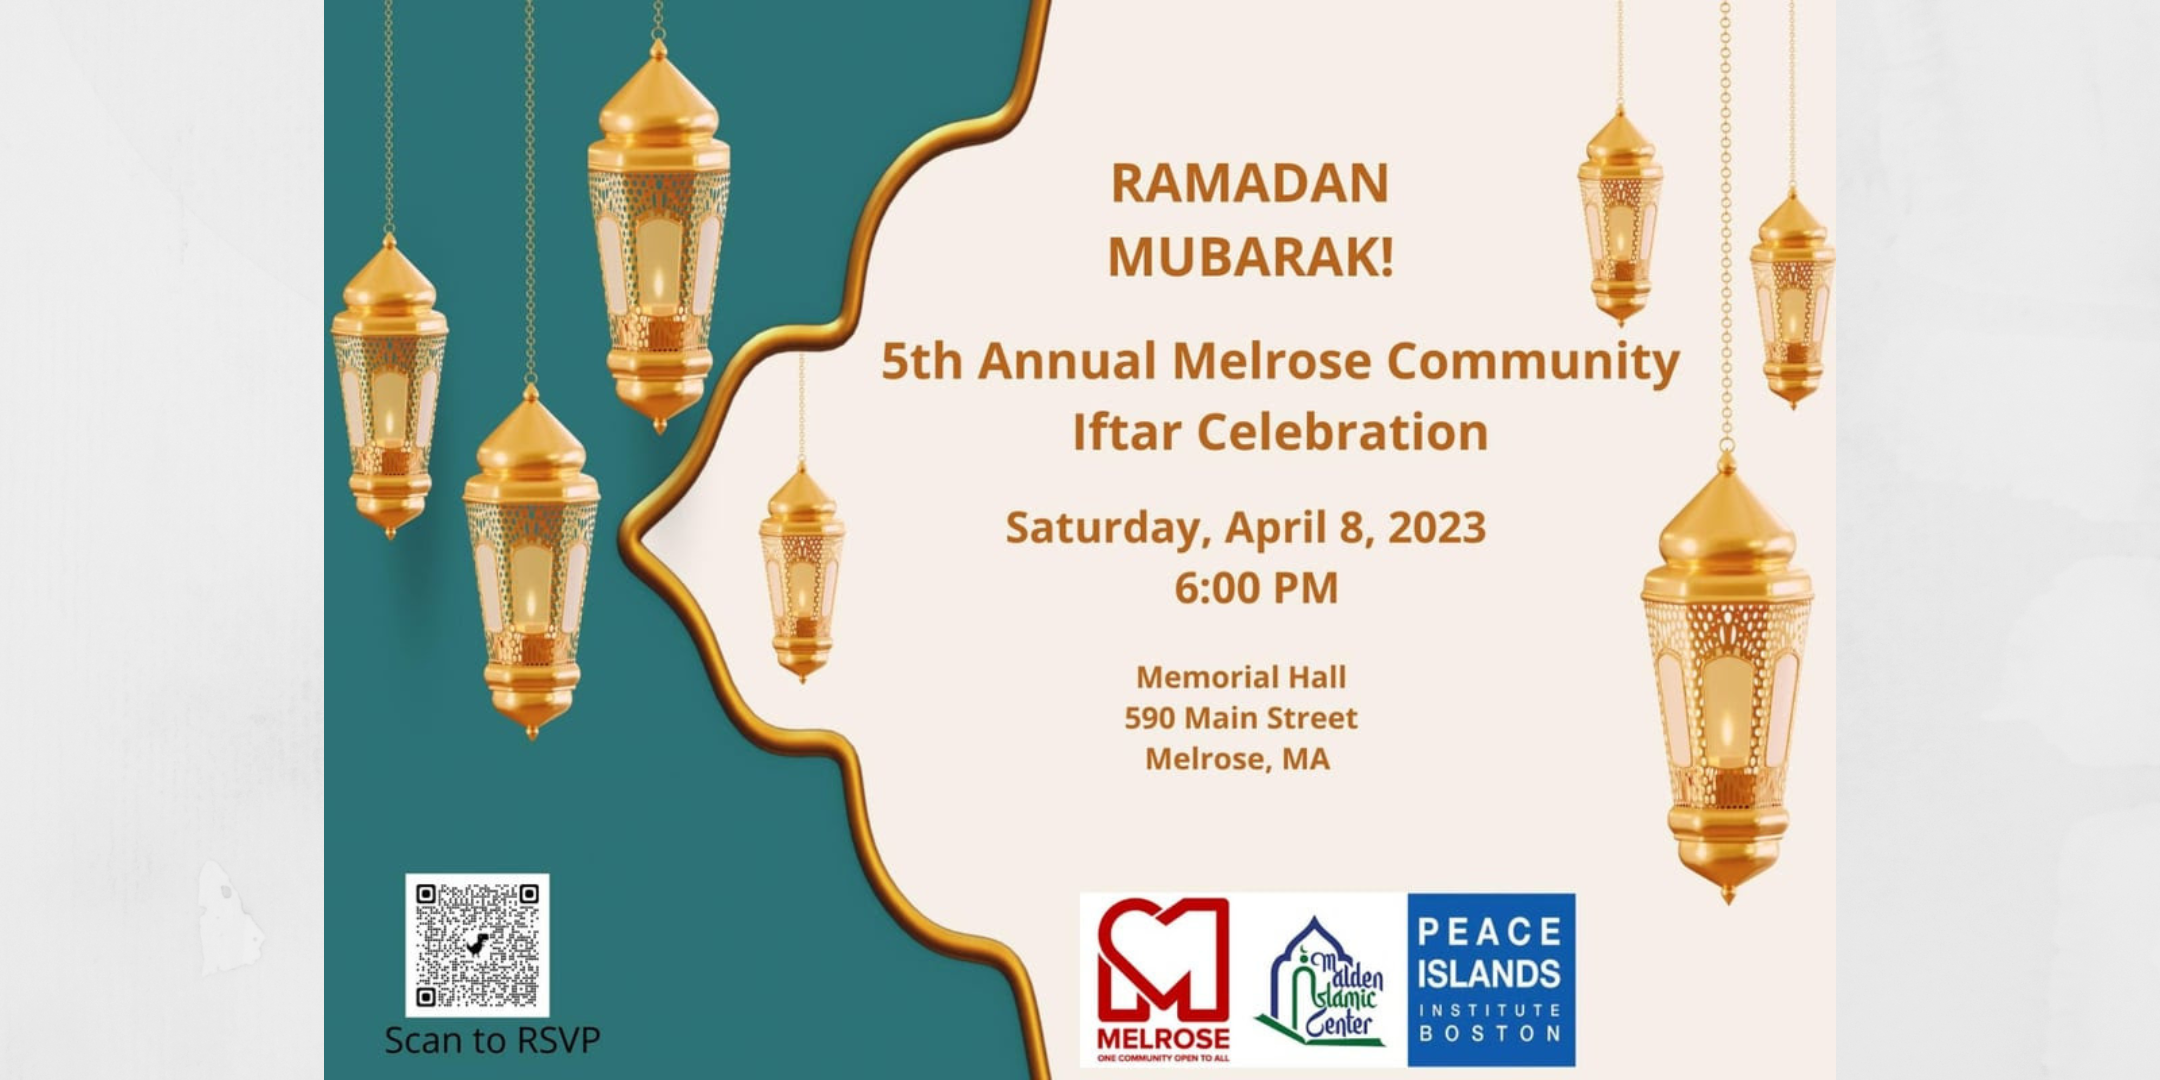 5th Annual Melrose Community Iftar Celebration